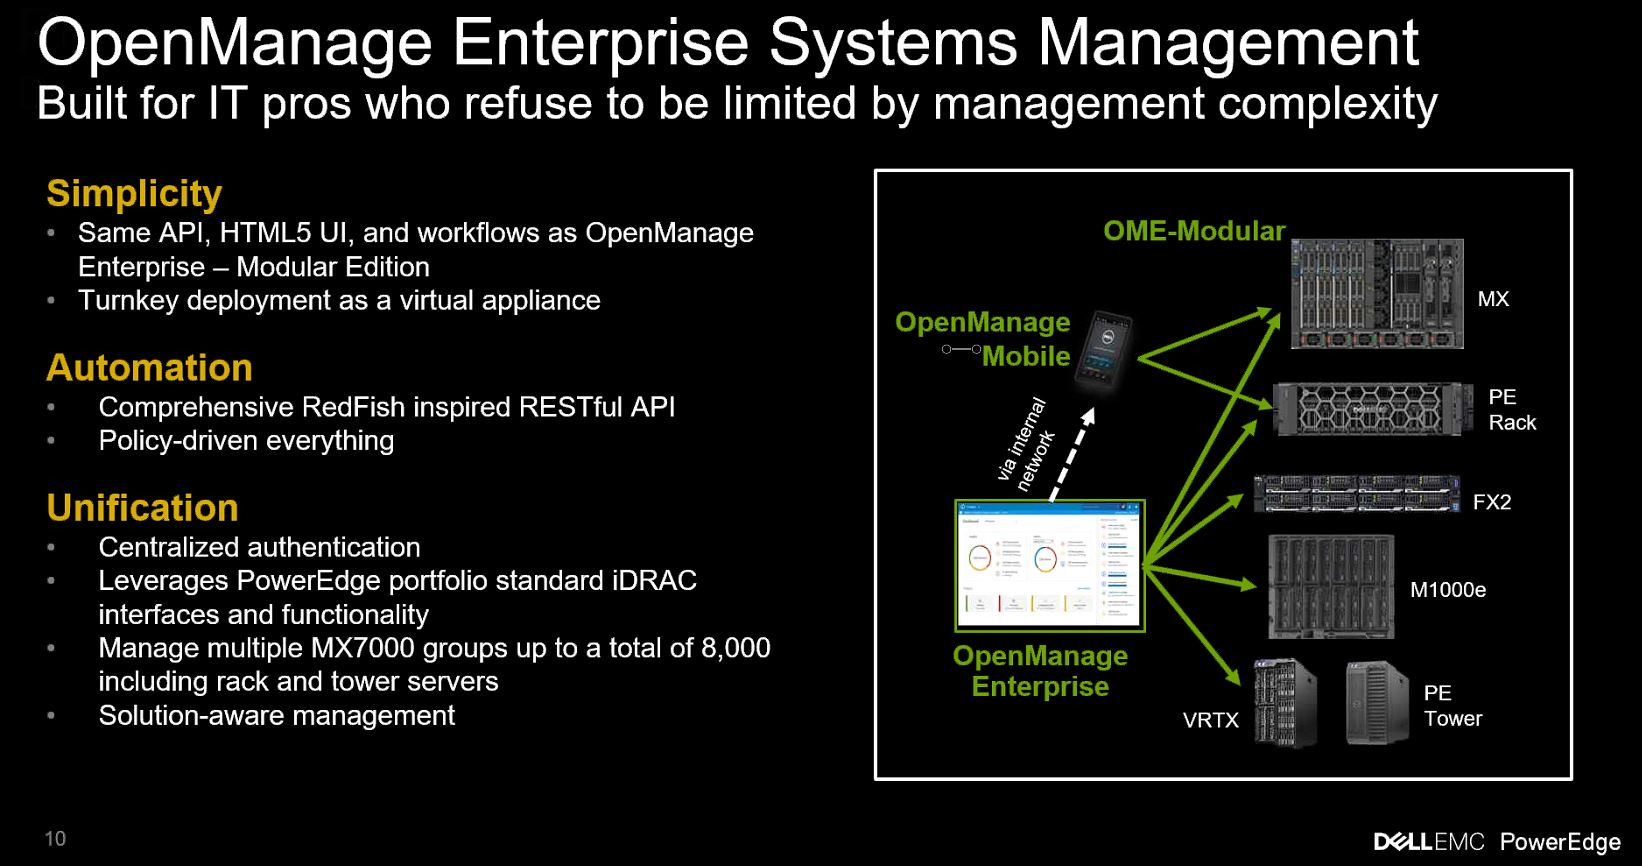 Dell EMC PowerEdge MX Open Manage Enteprise Systems Management